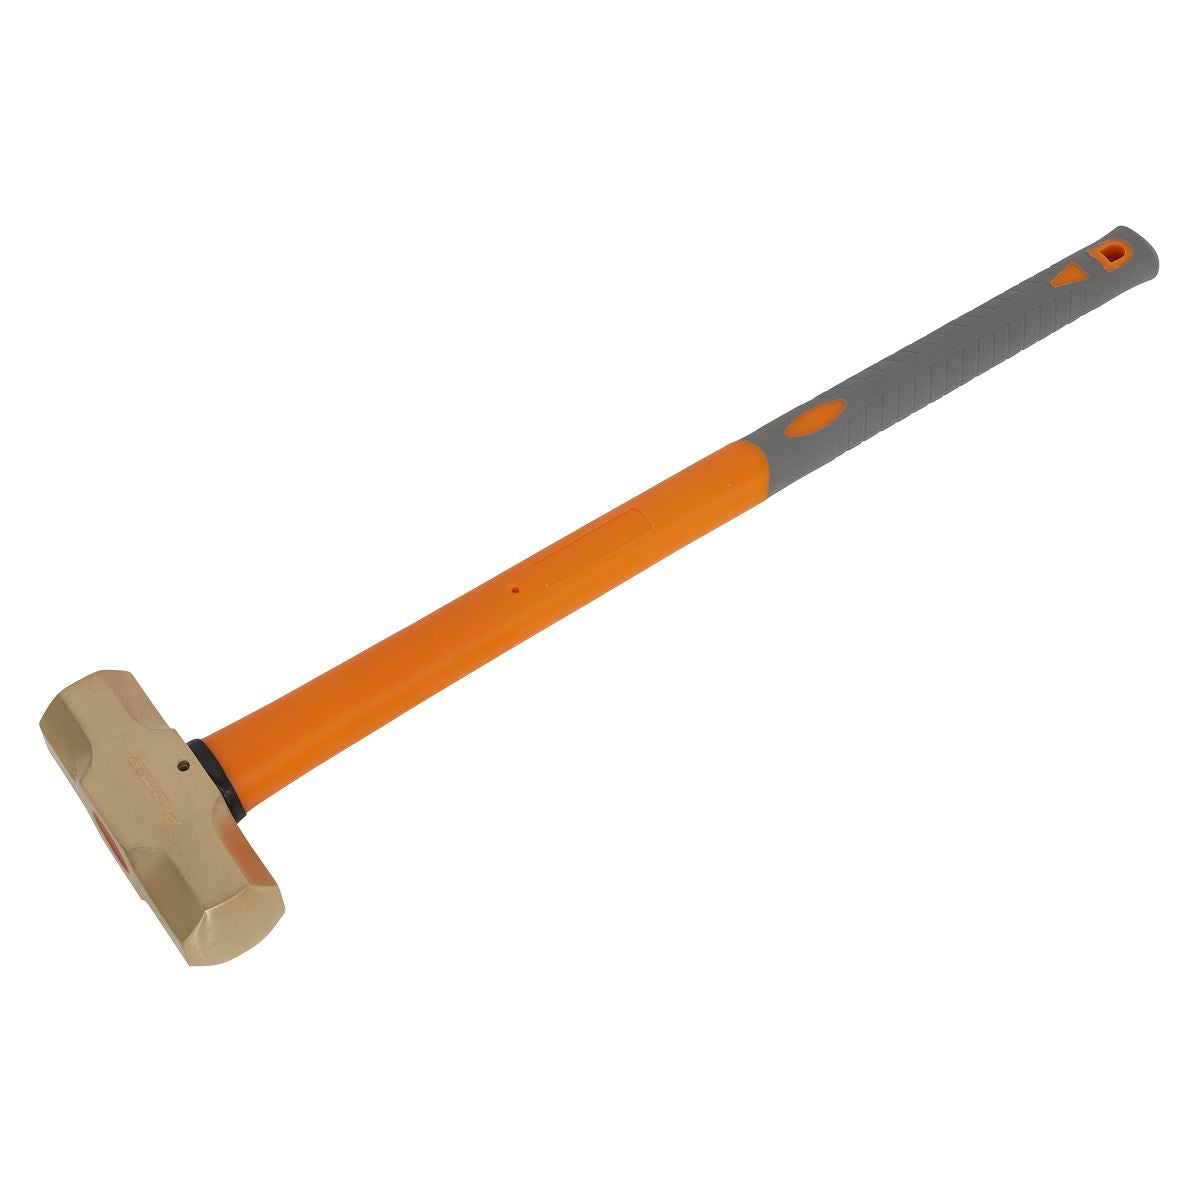 Sealey Premier Sledge Hammer 6.6lb - Non-Sparking